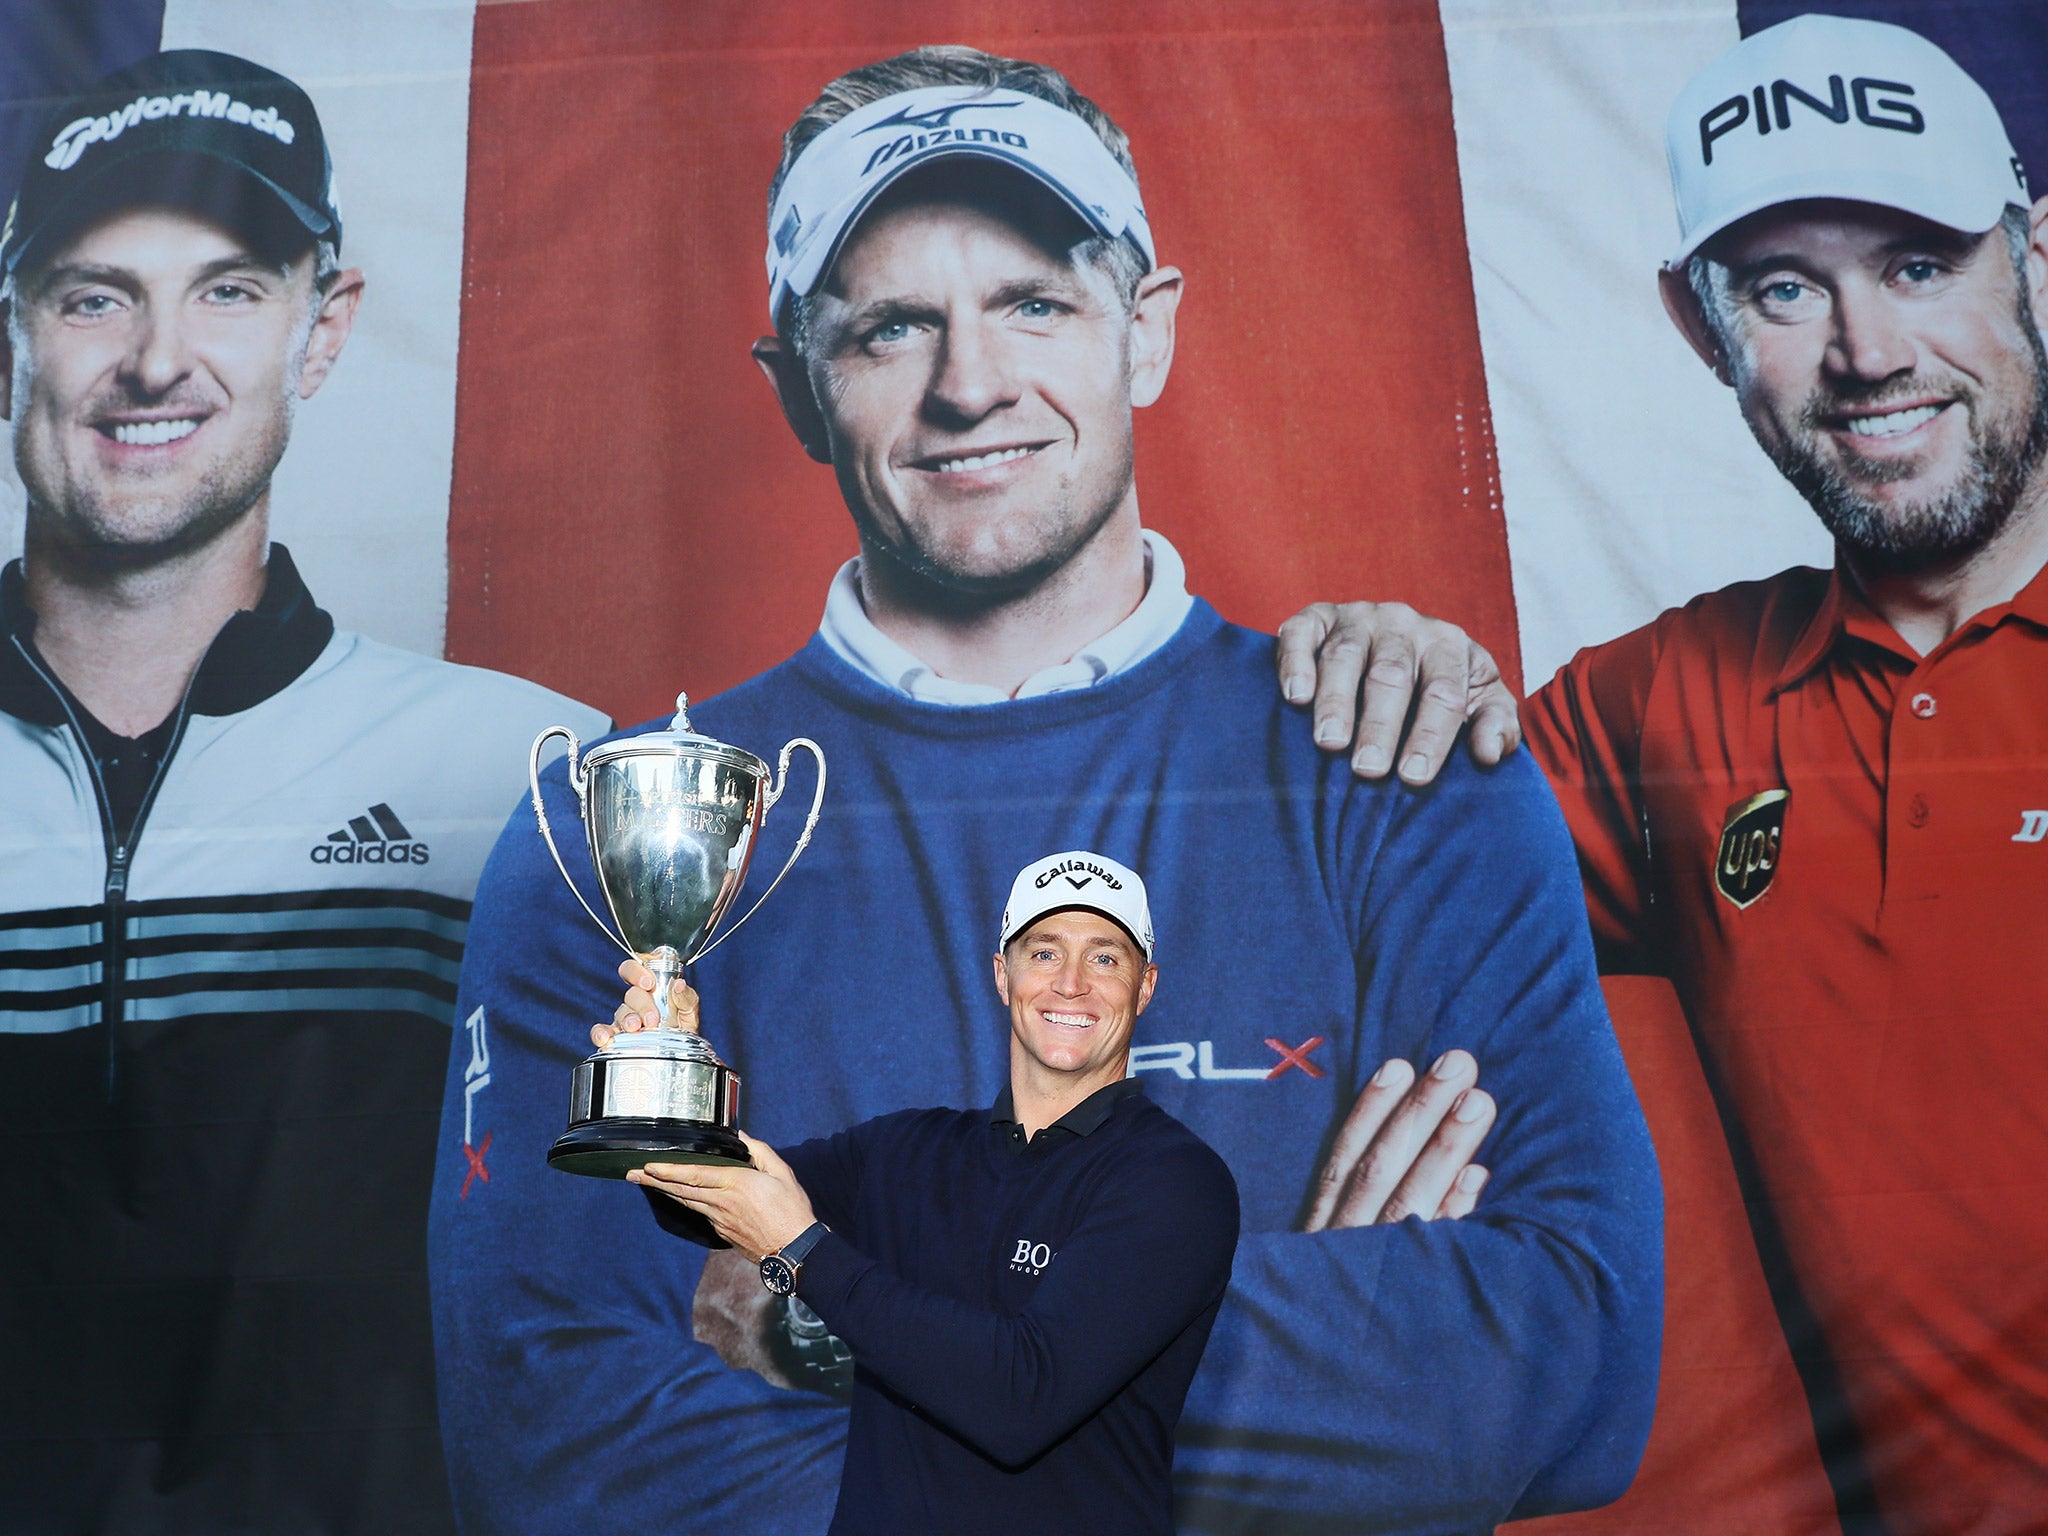 Noren shows off his British Masters trophy